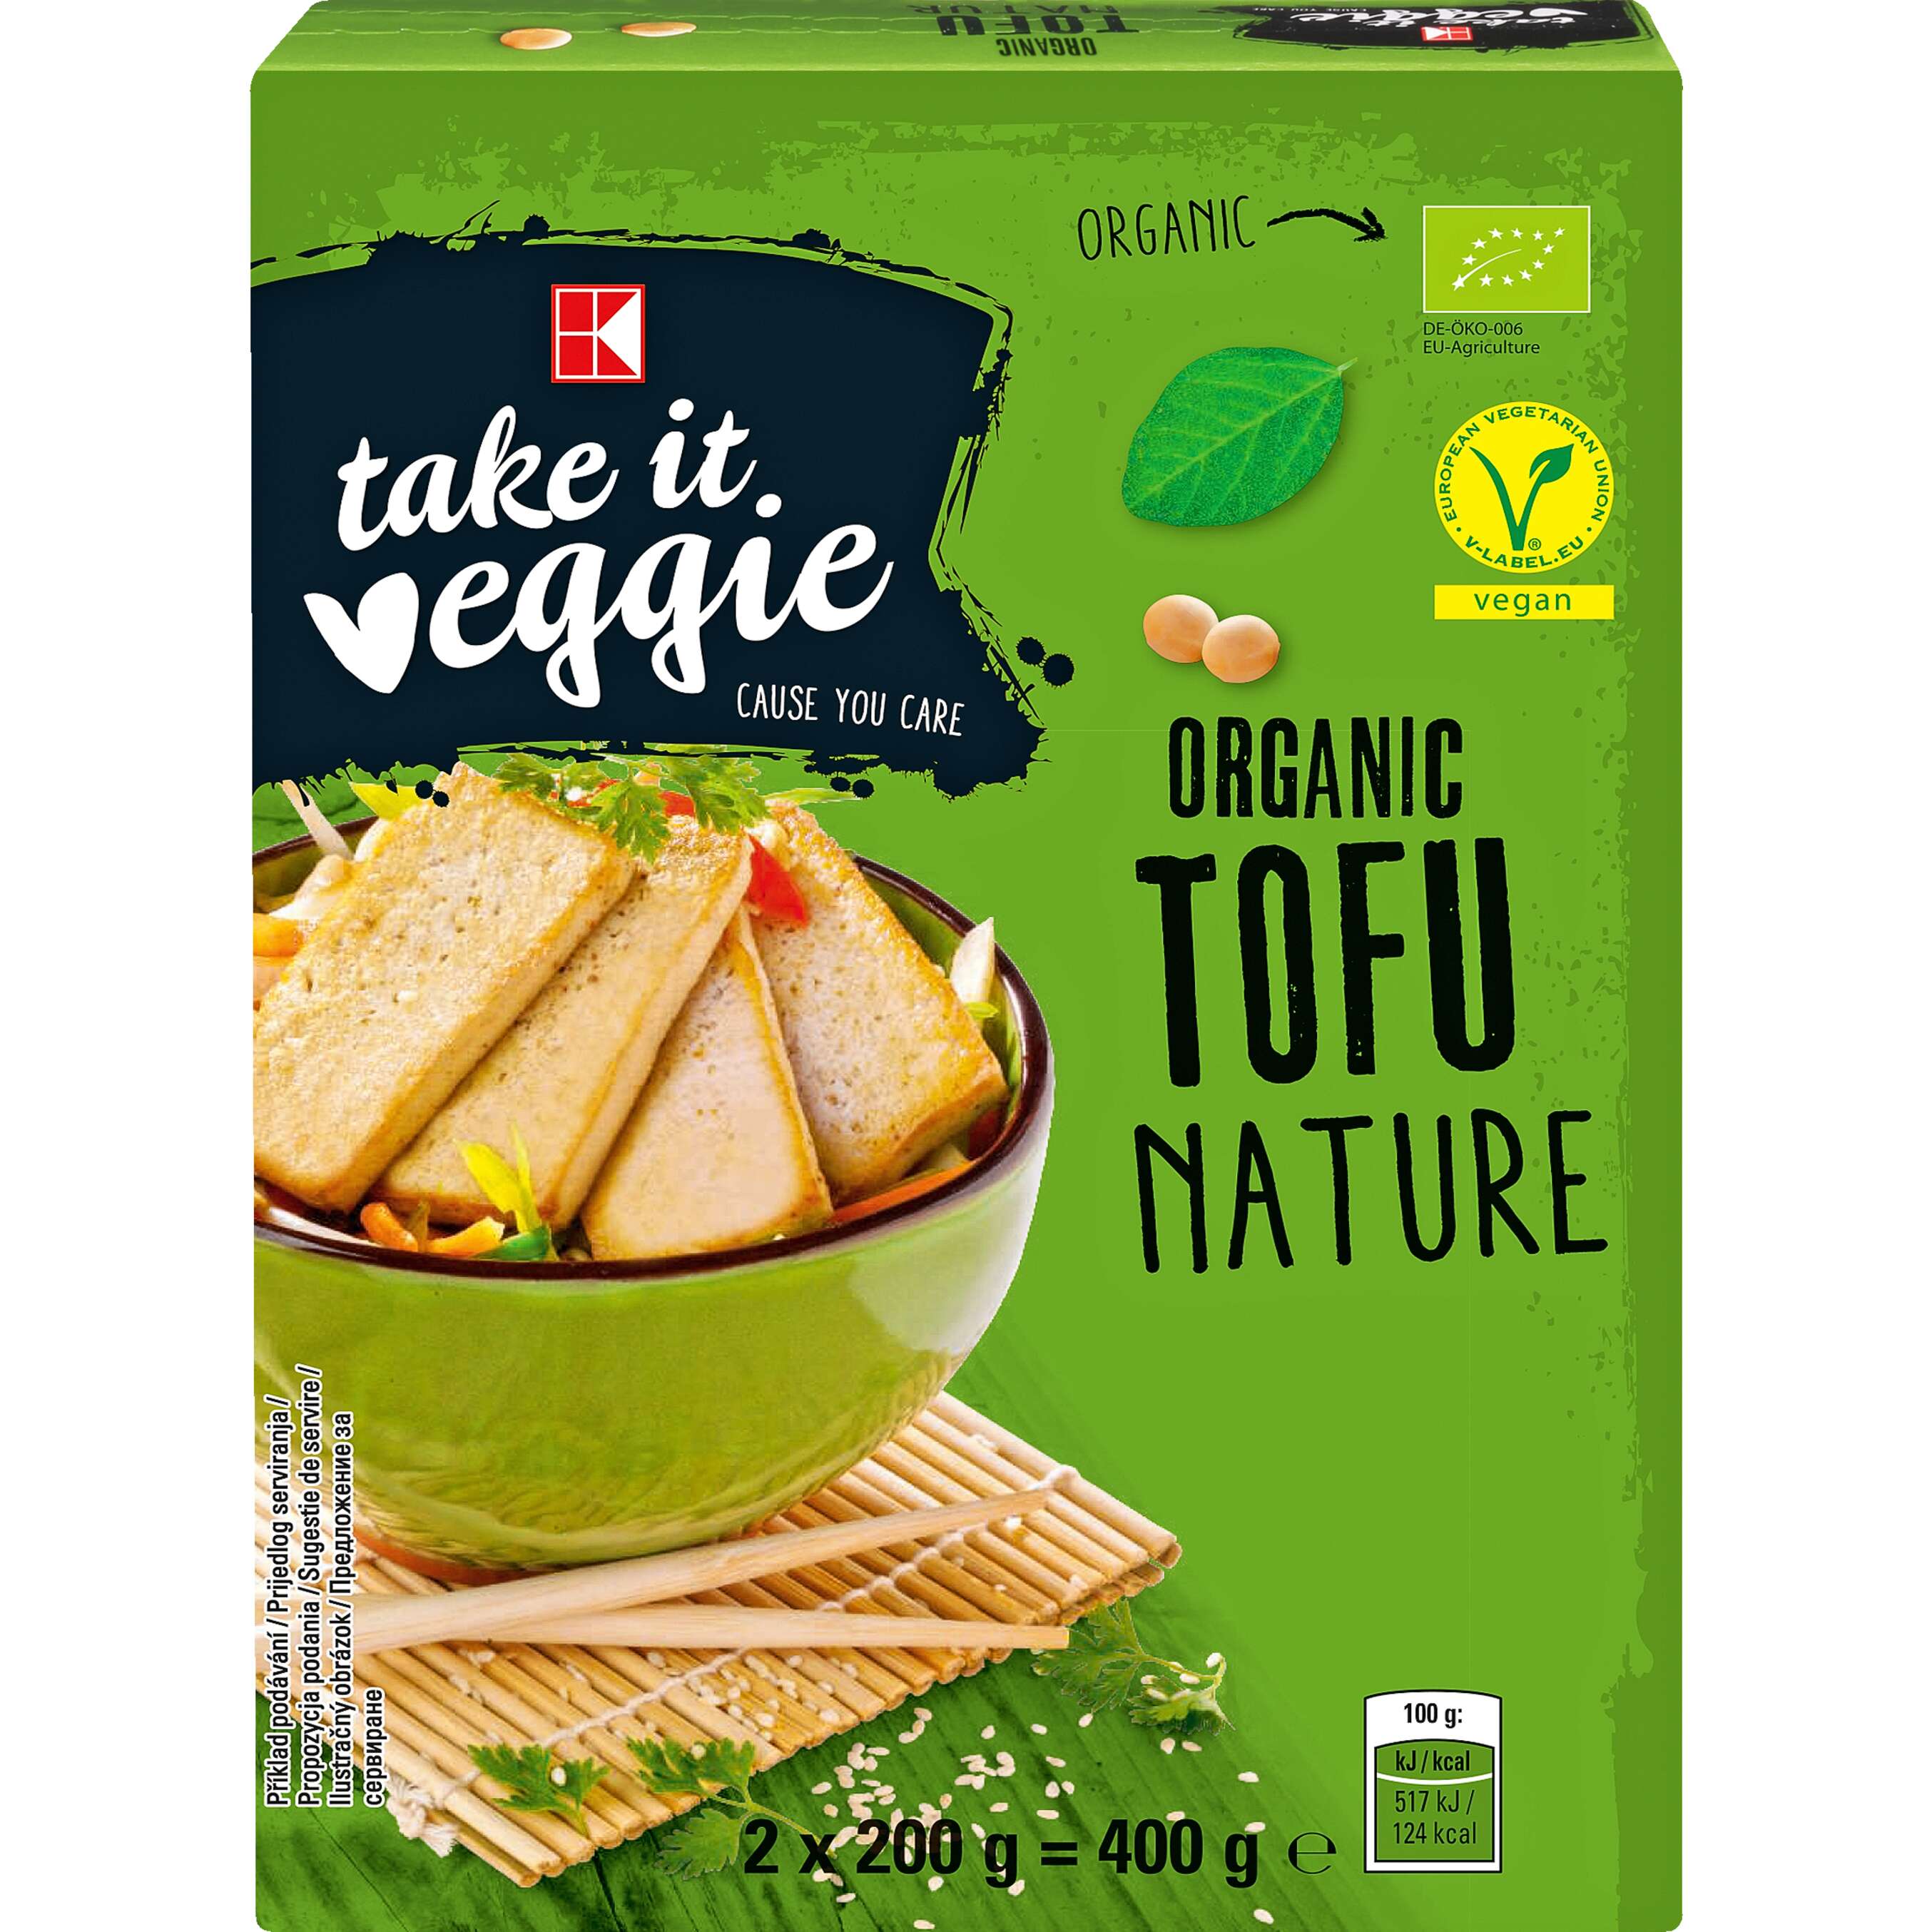 Zobrazit nabídku Take it veggie Bio tofu natur